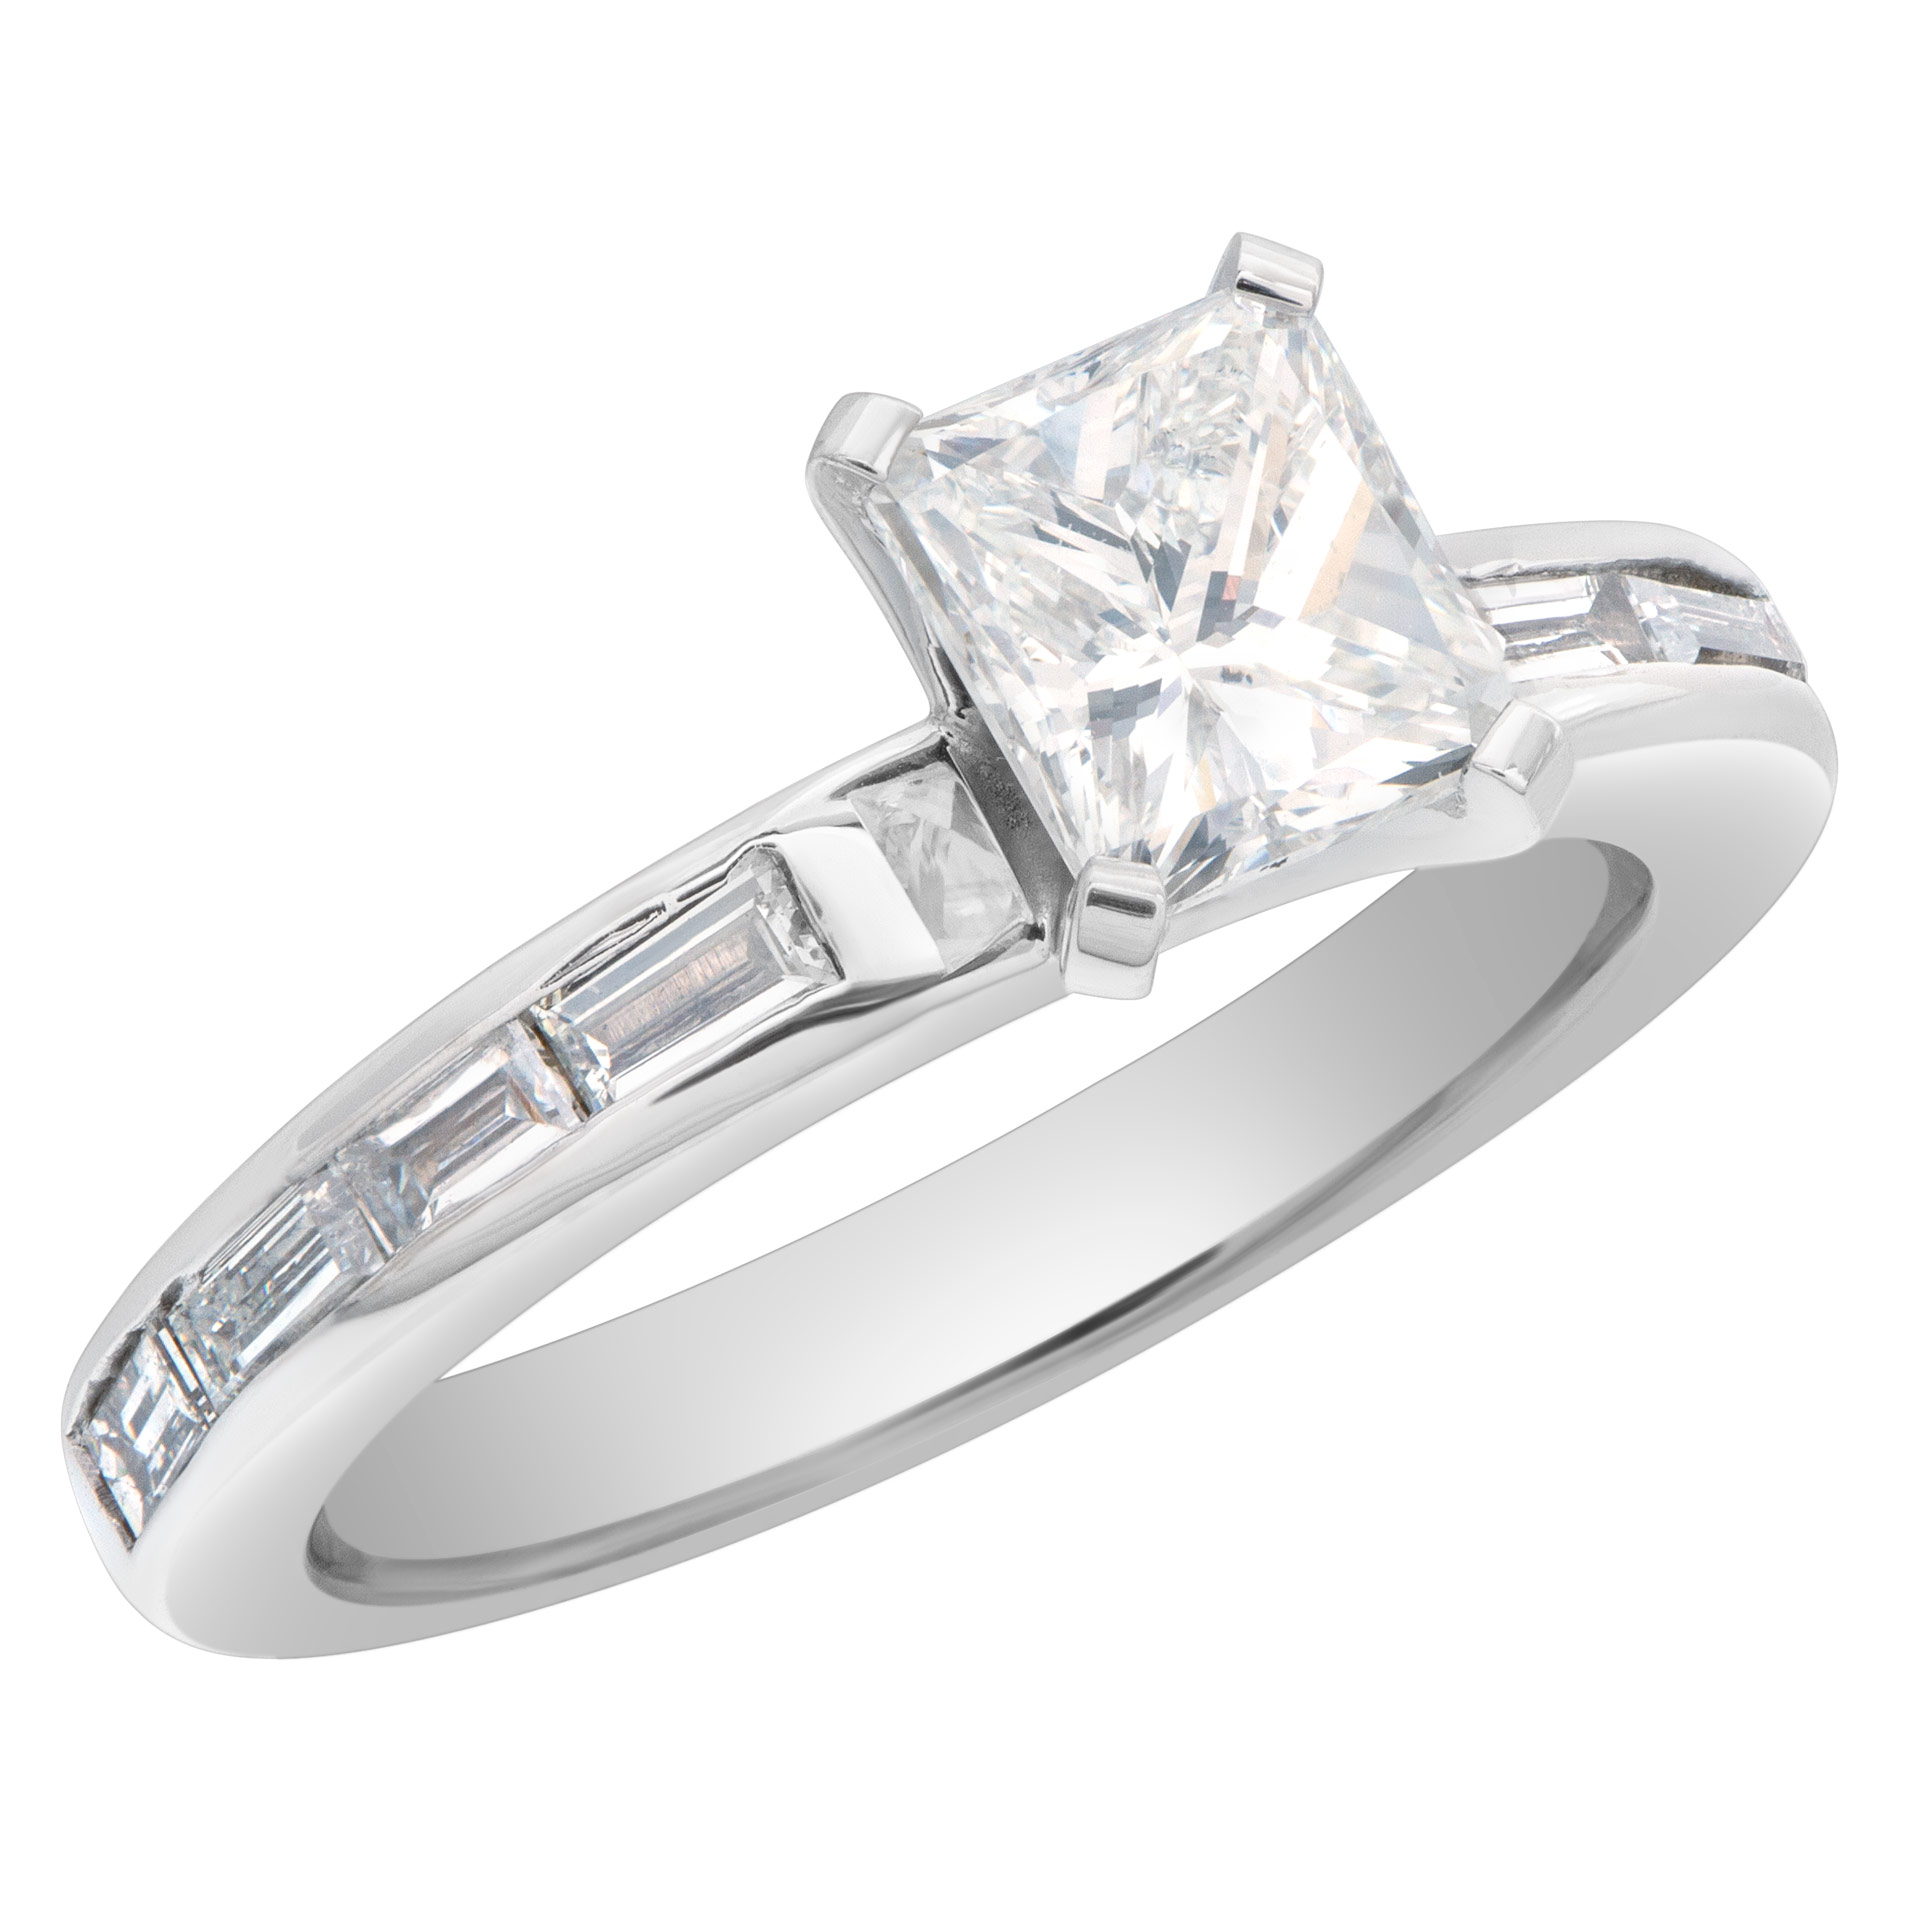 GIA certified cut-cornered rectangular modified brilliant cut diamond ring image 3